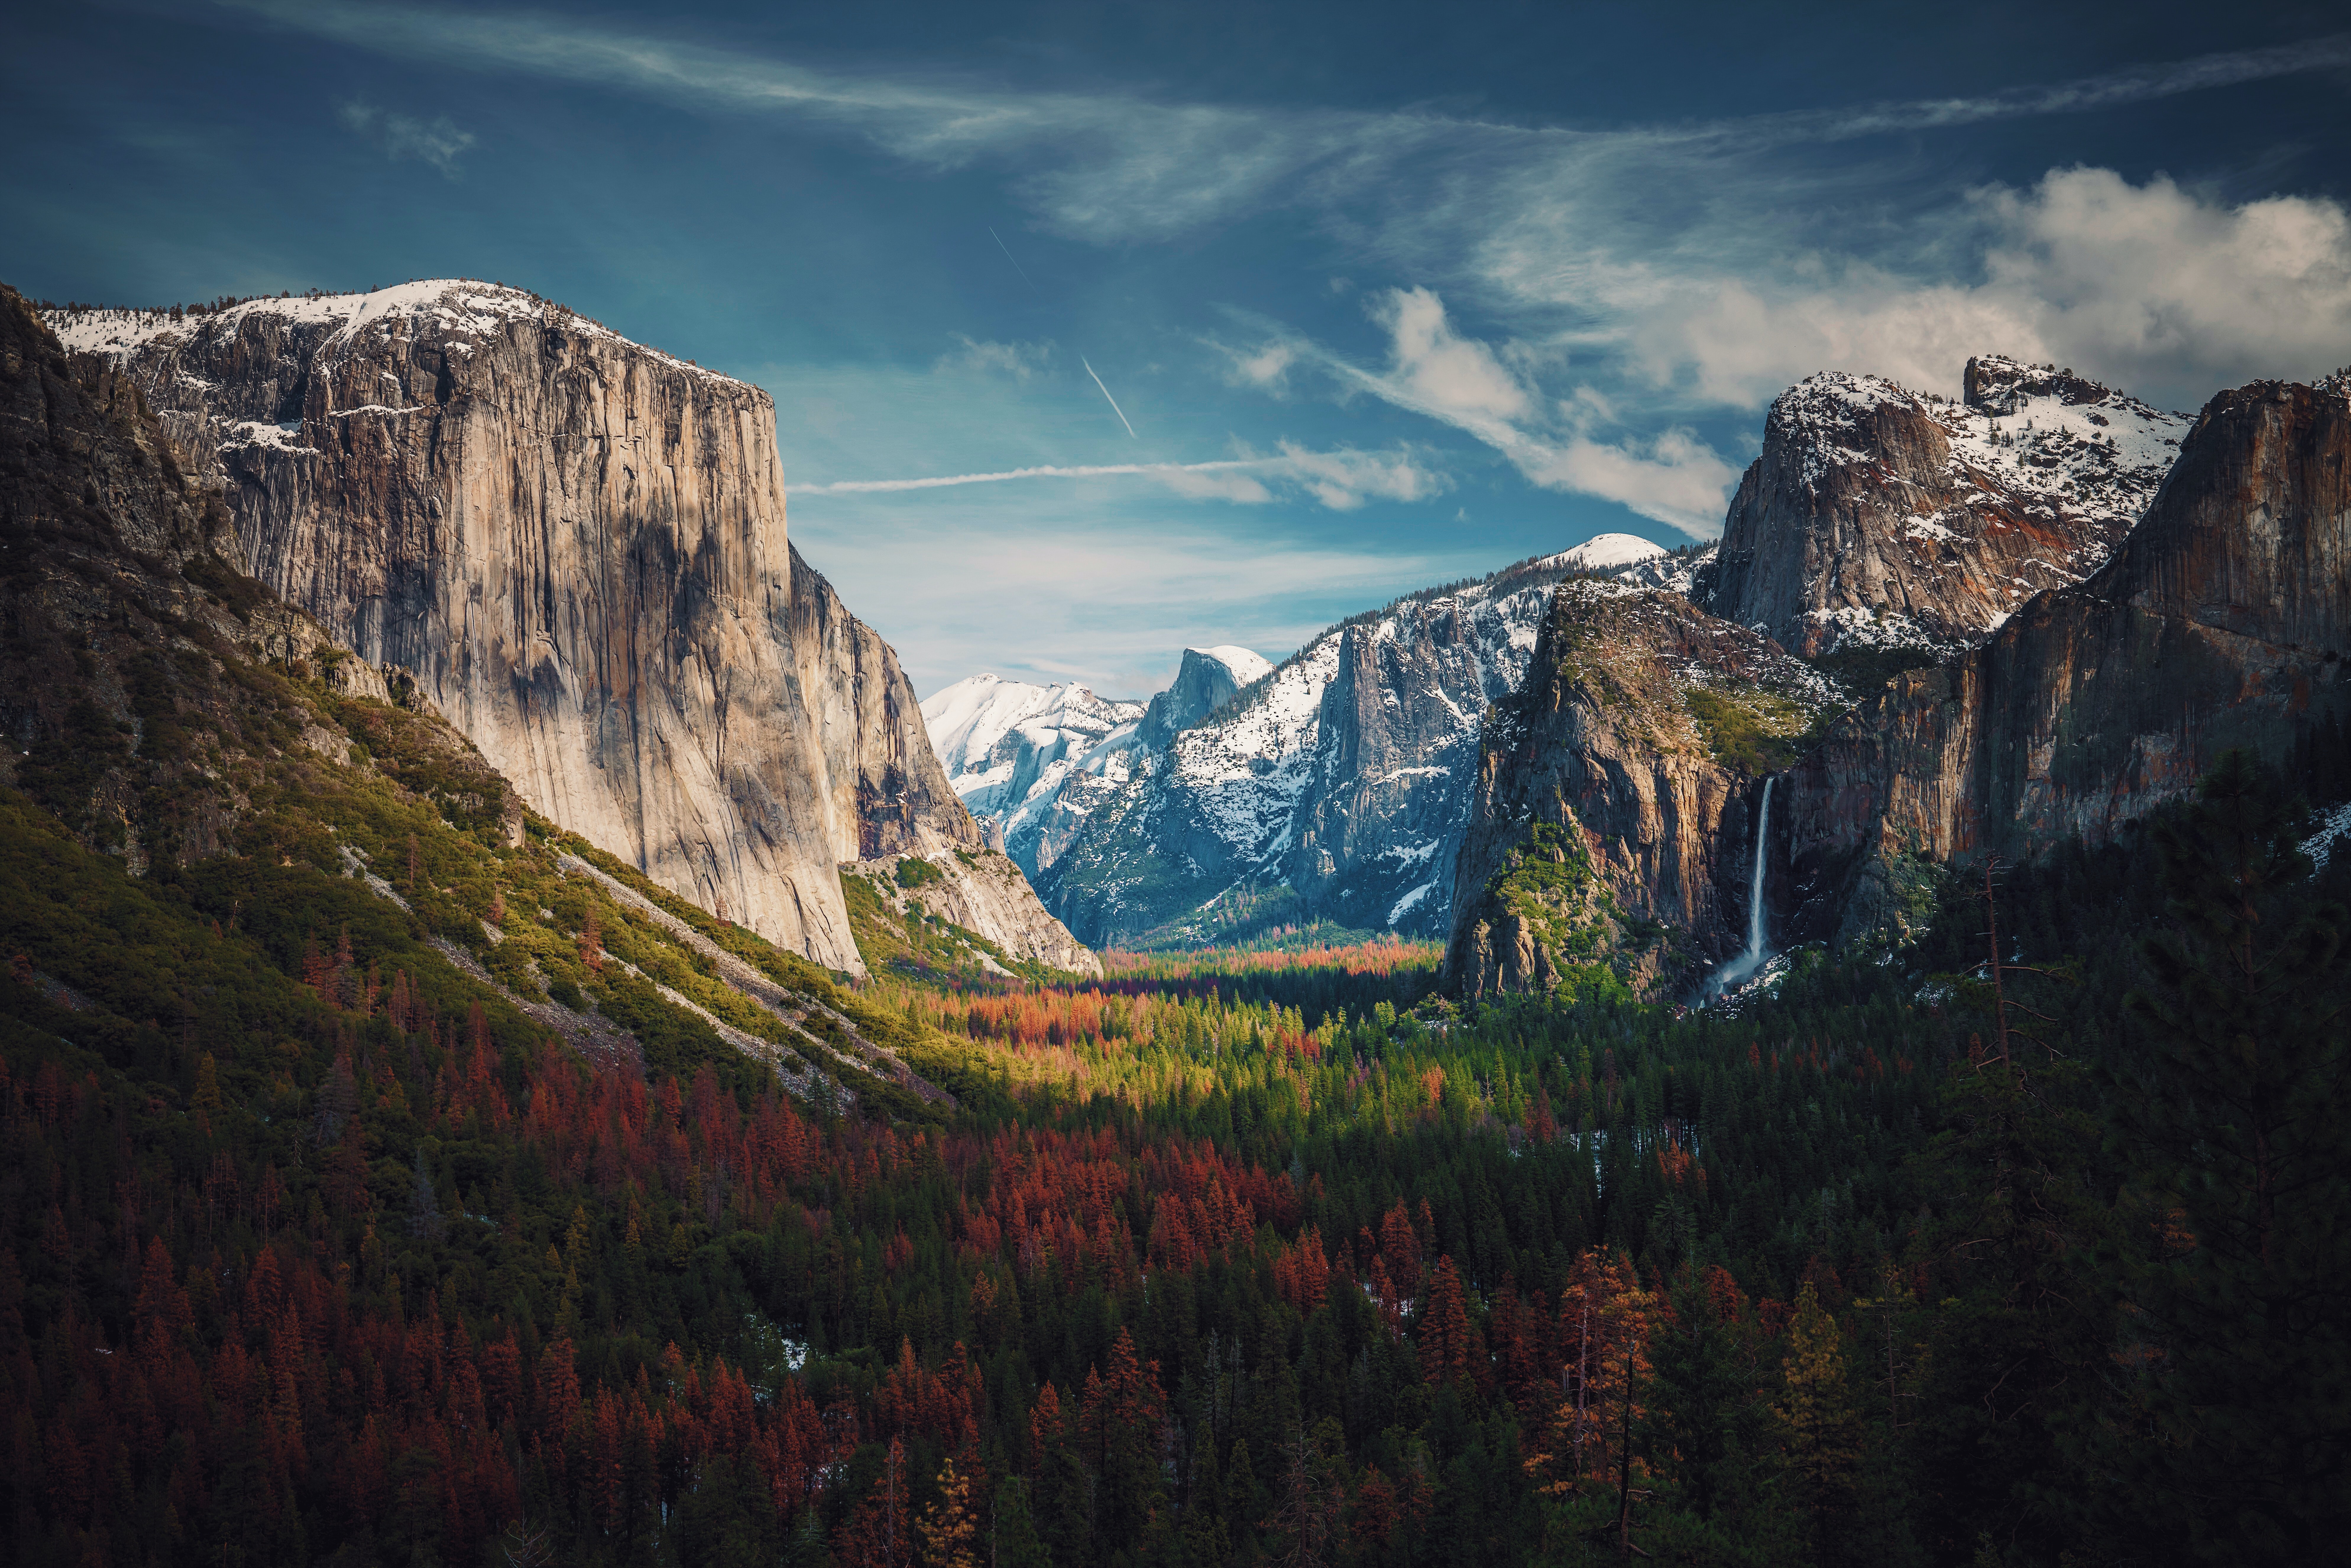 Yosemite National Park looks like a surreal fairyland.